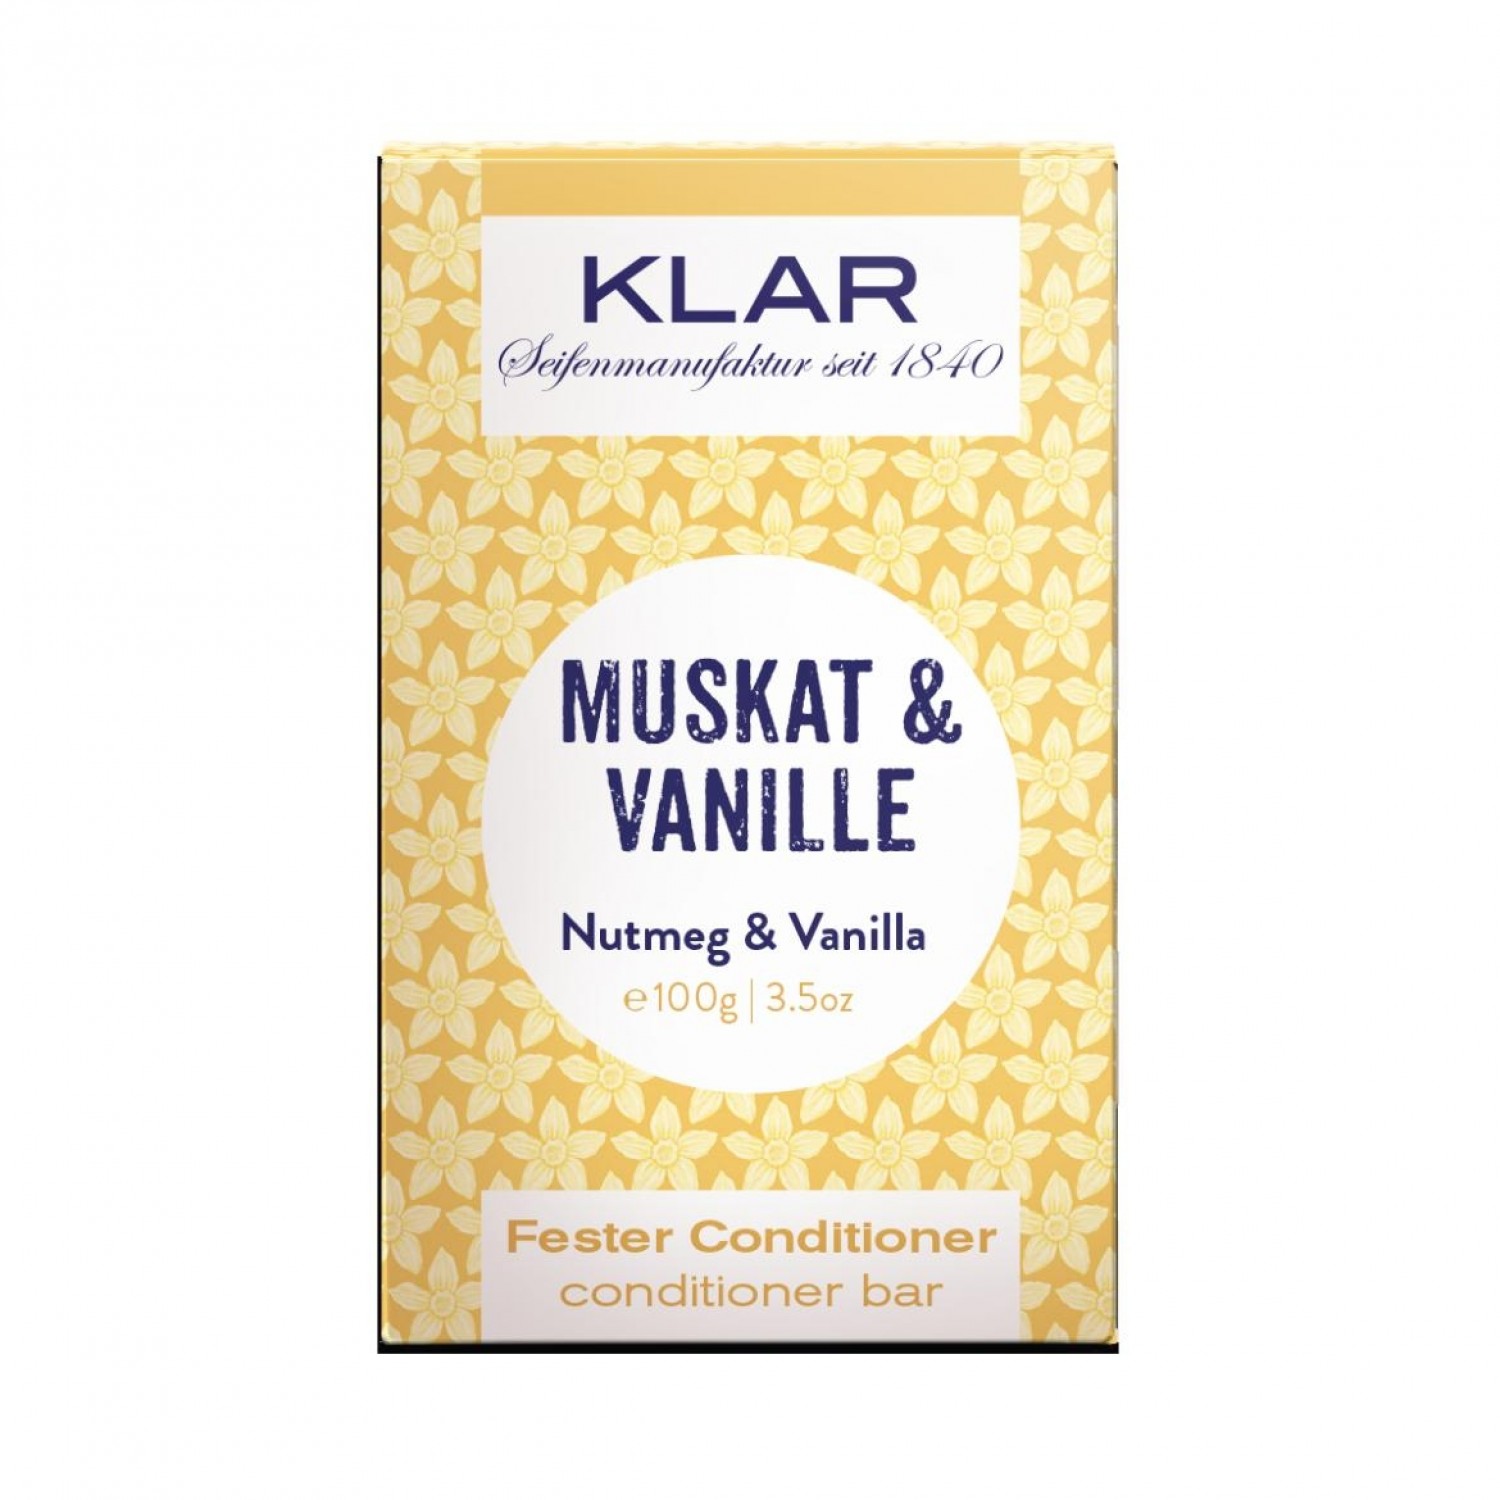 Klar’s Conditioner Bar Nutmeg & Vanilla vegan